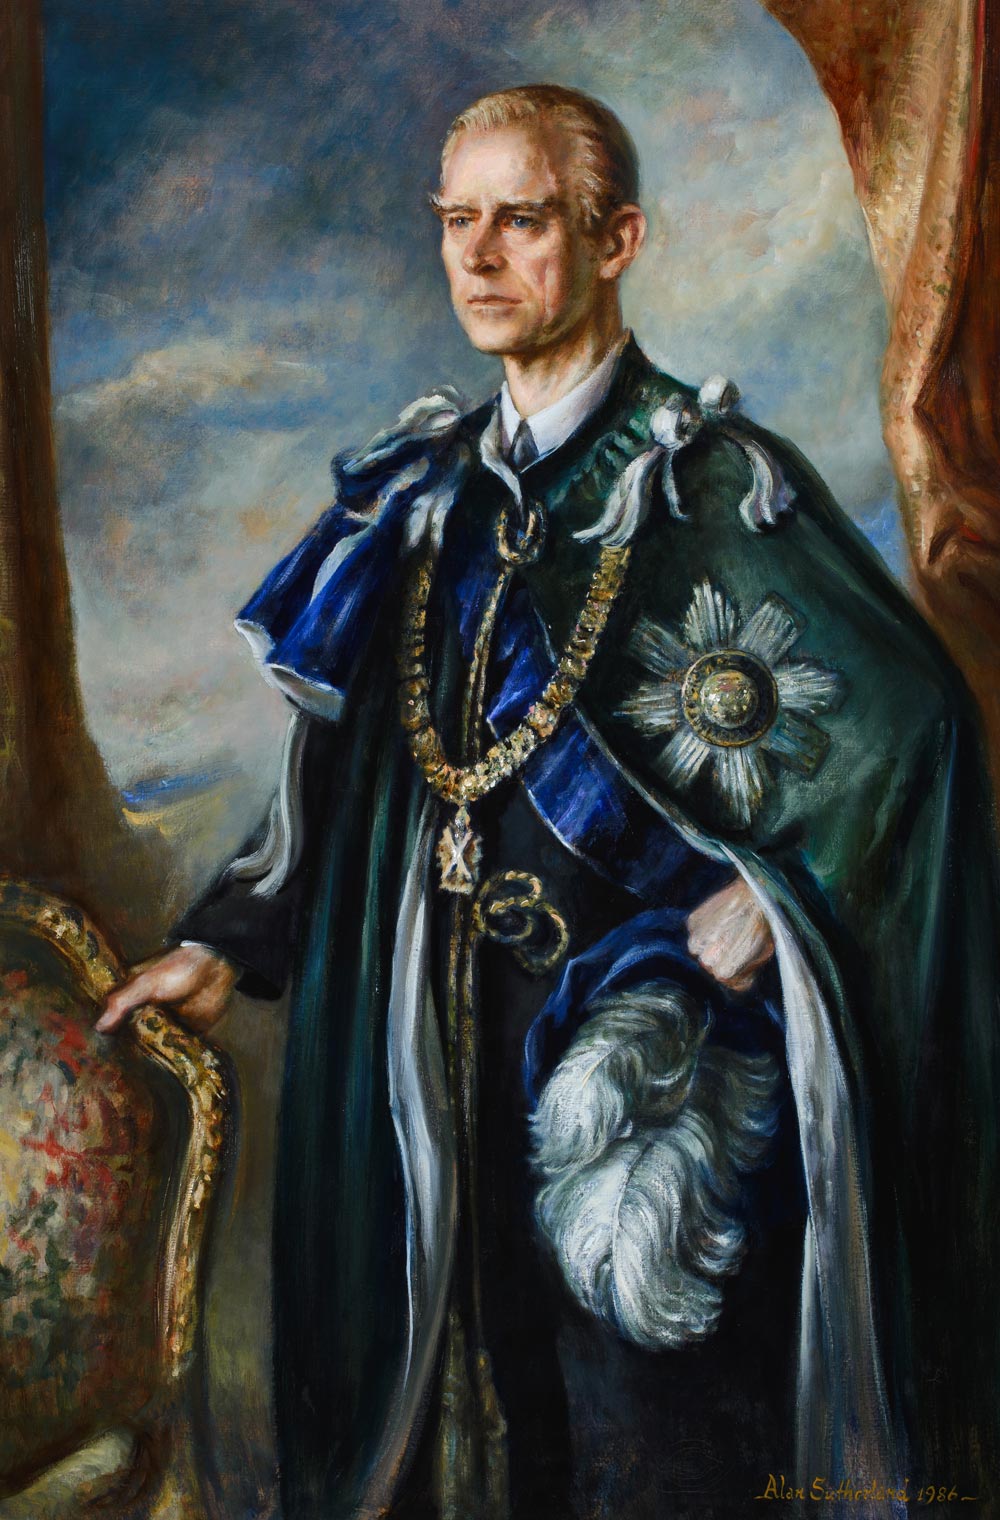 Portrait - HRH Prince Philip, Duke of Edinburgh